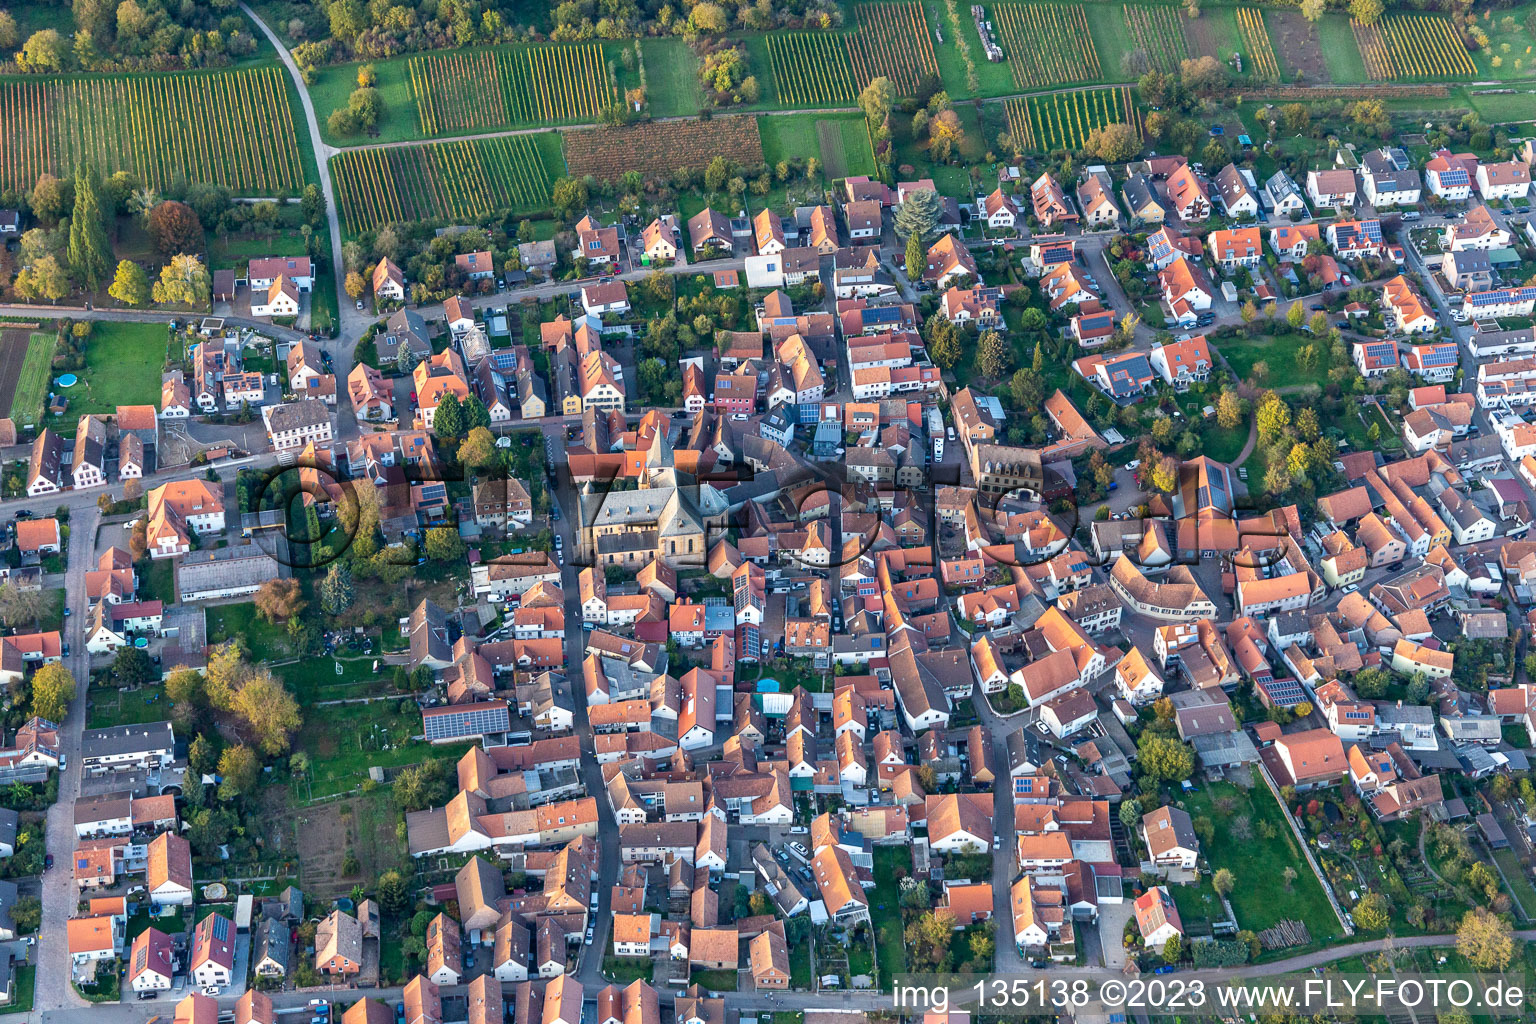 District Arzheim in Landau in der Pfalz in the state Rhineland-Palatinate, Germany seen from above